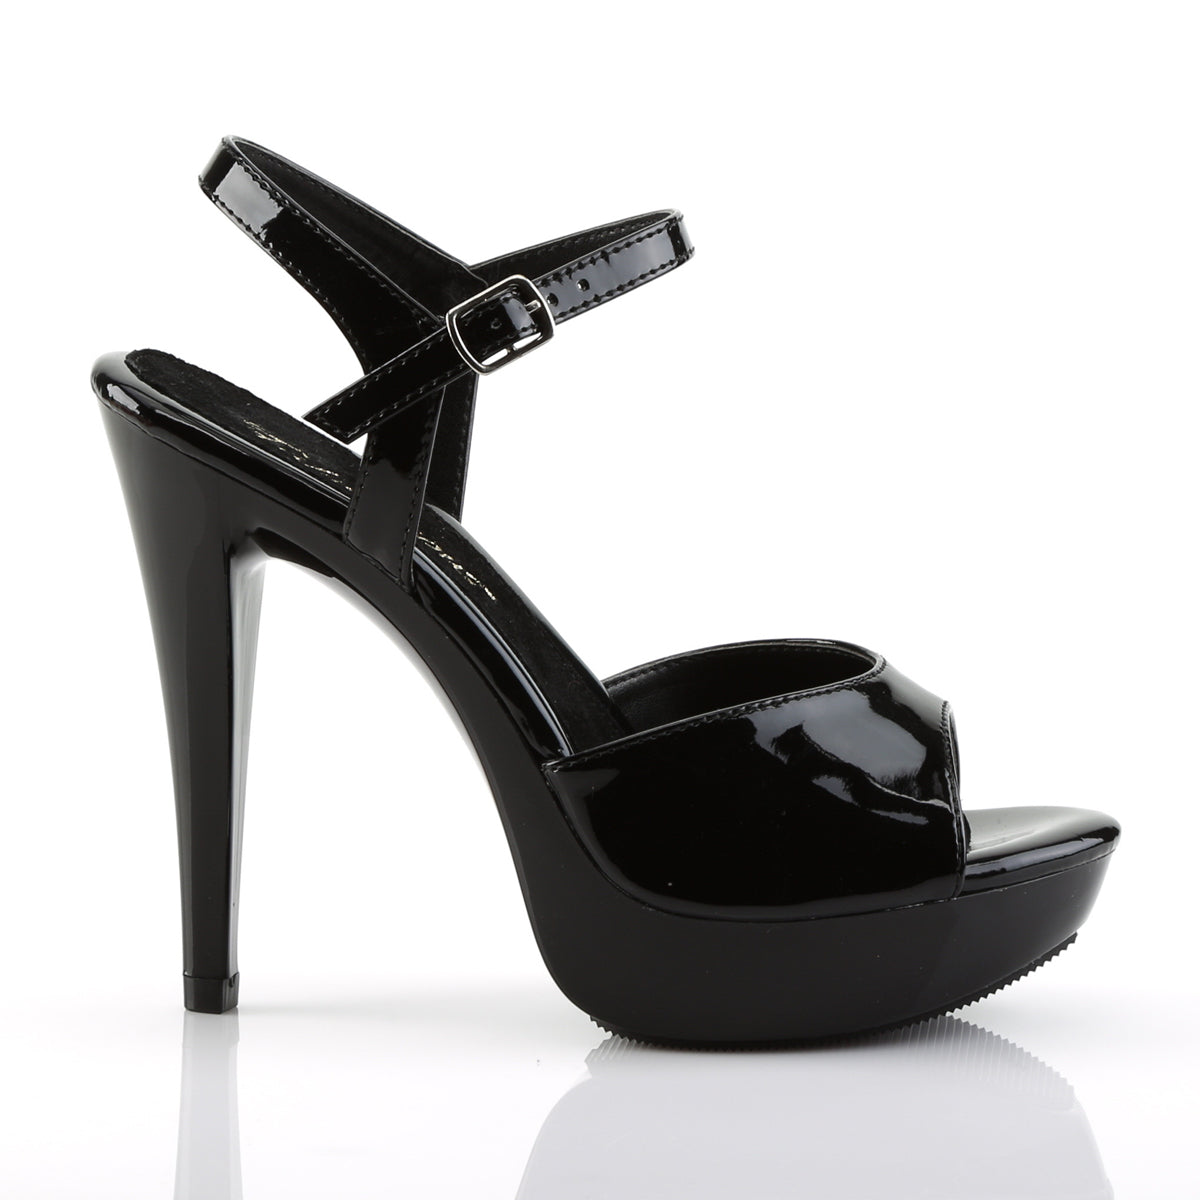 COCKTAIL-509 Fabulicious 5 Inch Heel Black Sexy Shoes-Fabulicious- Sexy Shoes Fetish Heels